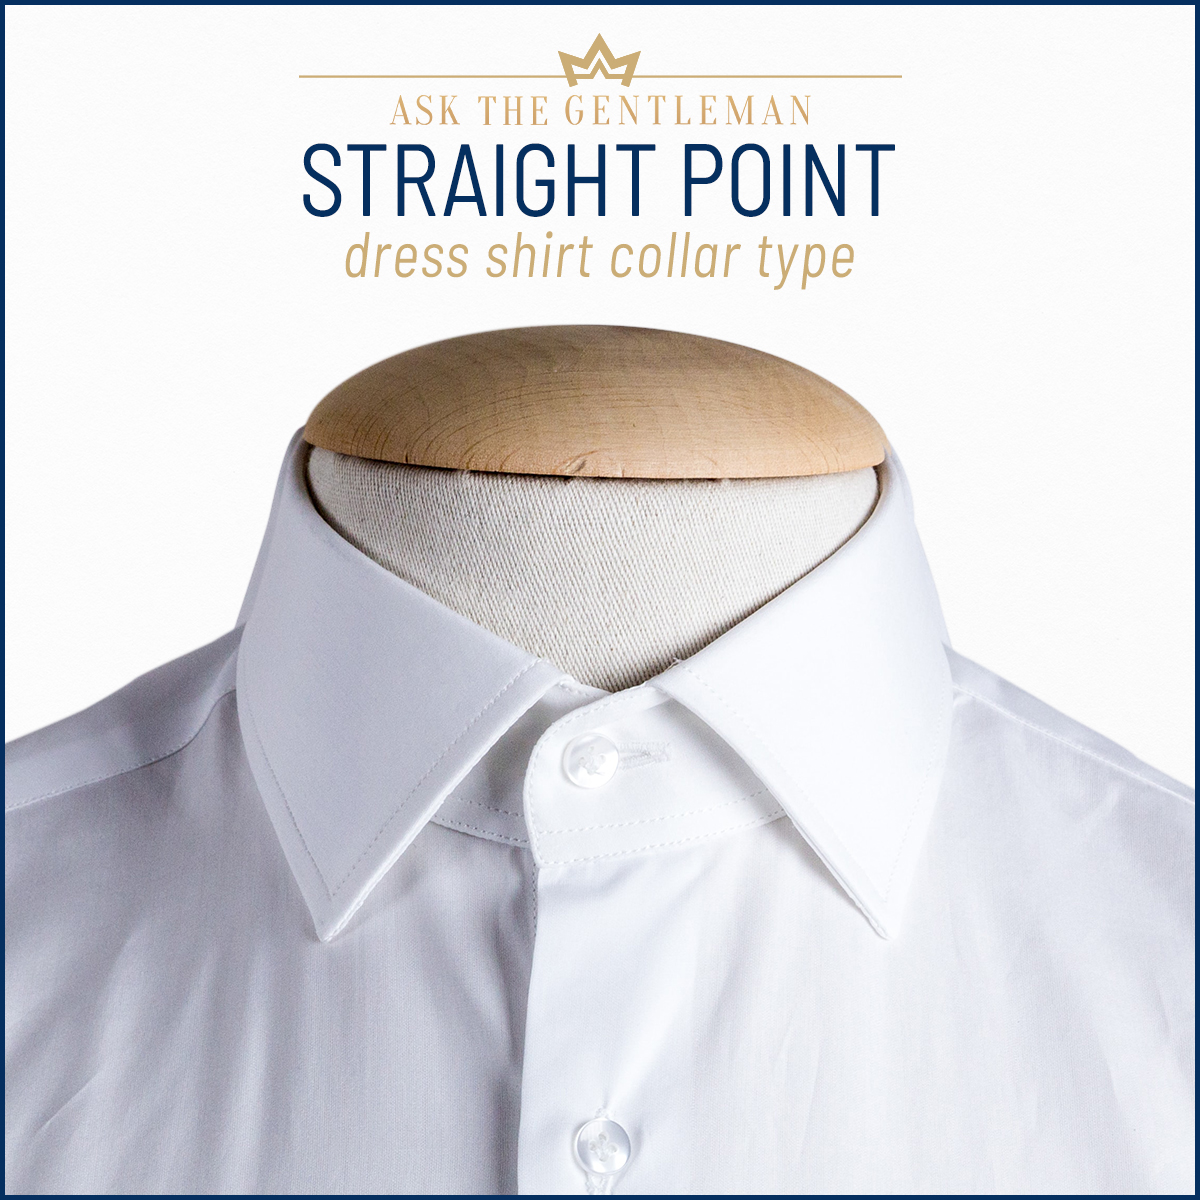 Straight point dress shirt collar type